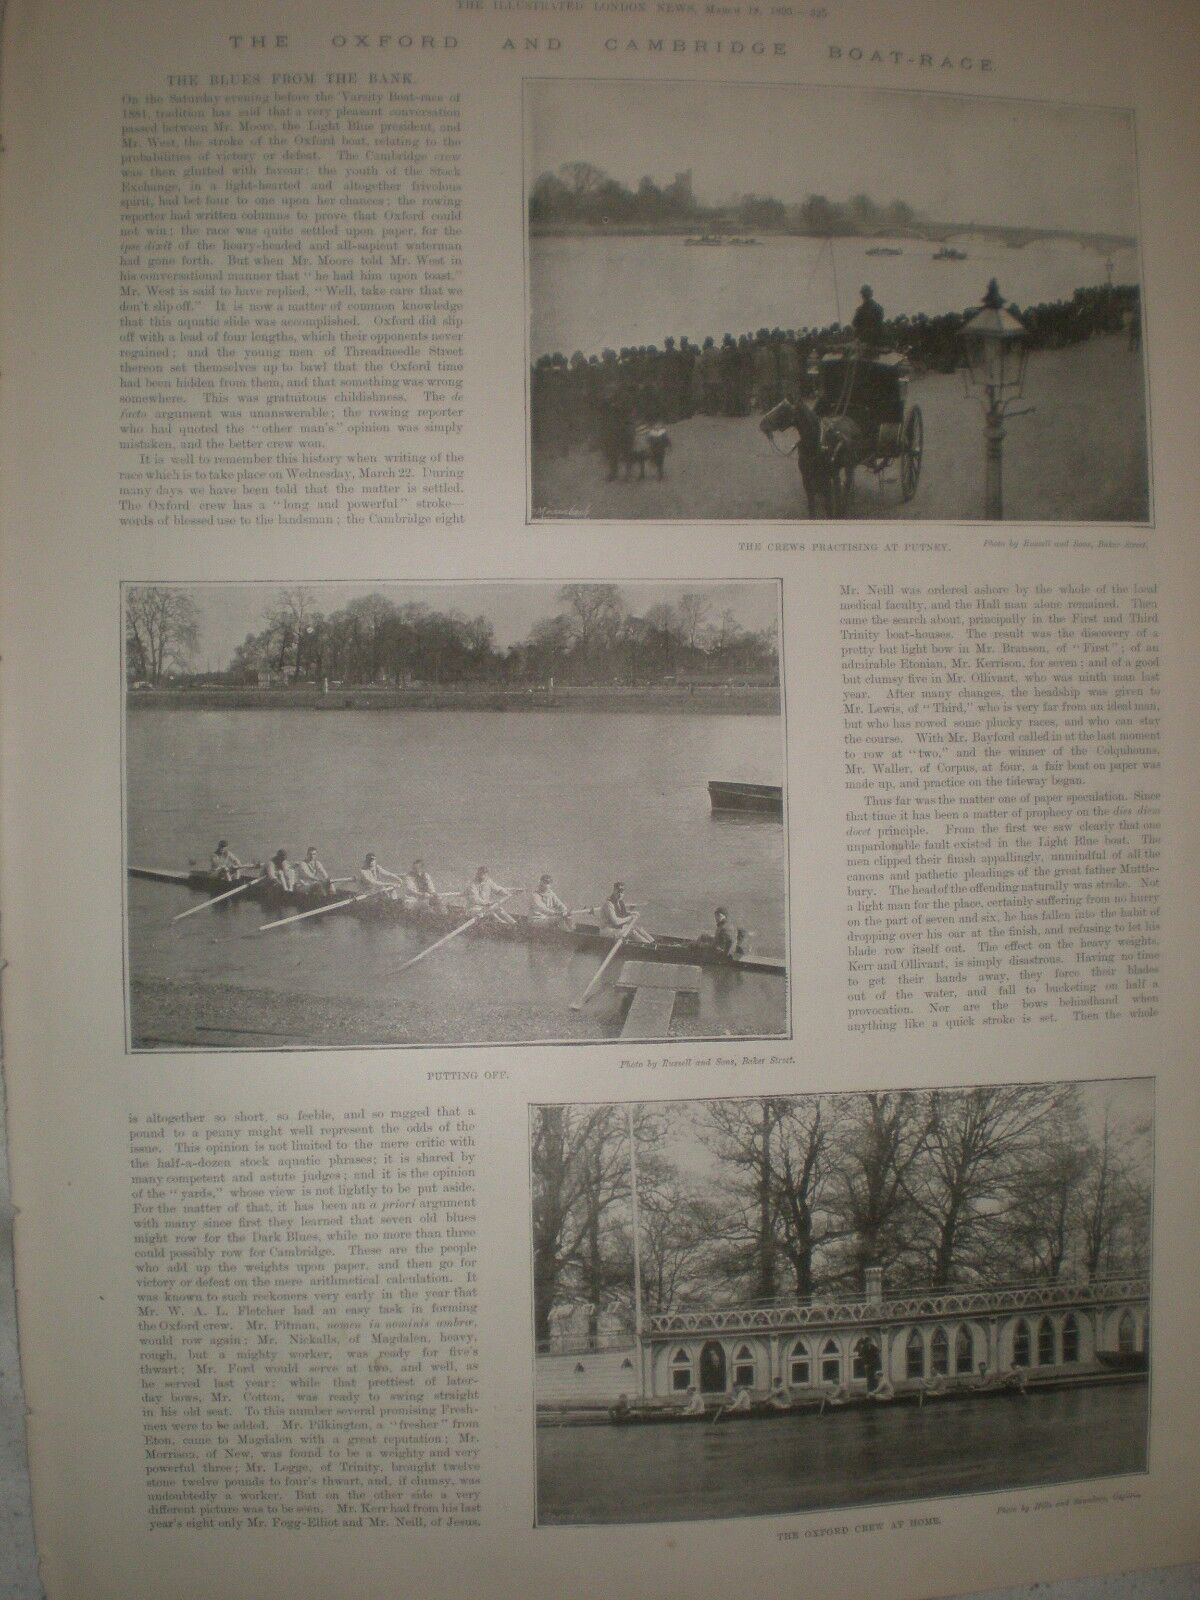 Photo article pre race Oxford Cambridge University boat practice 1893 ref AT